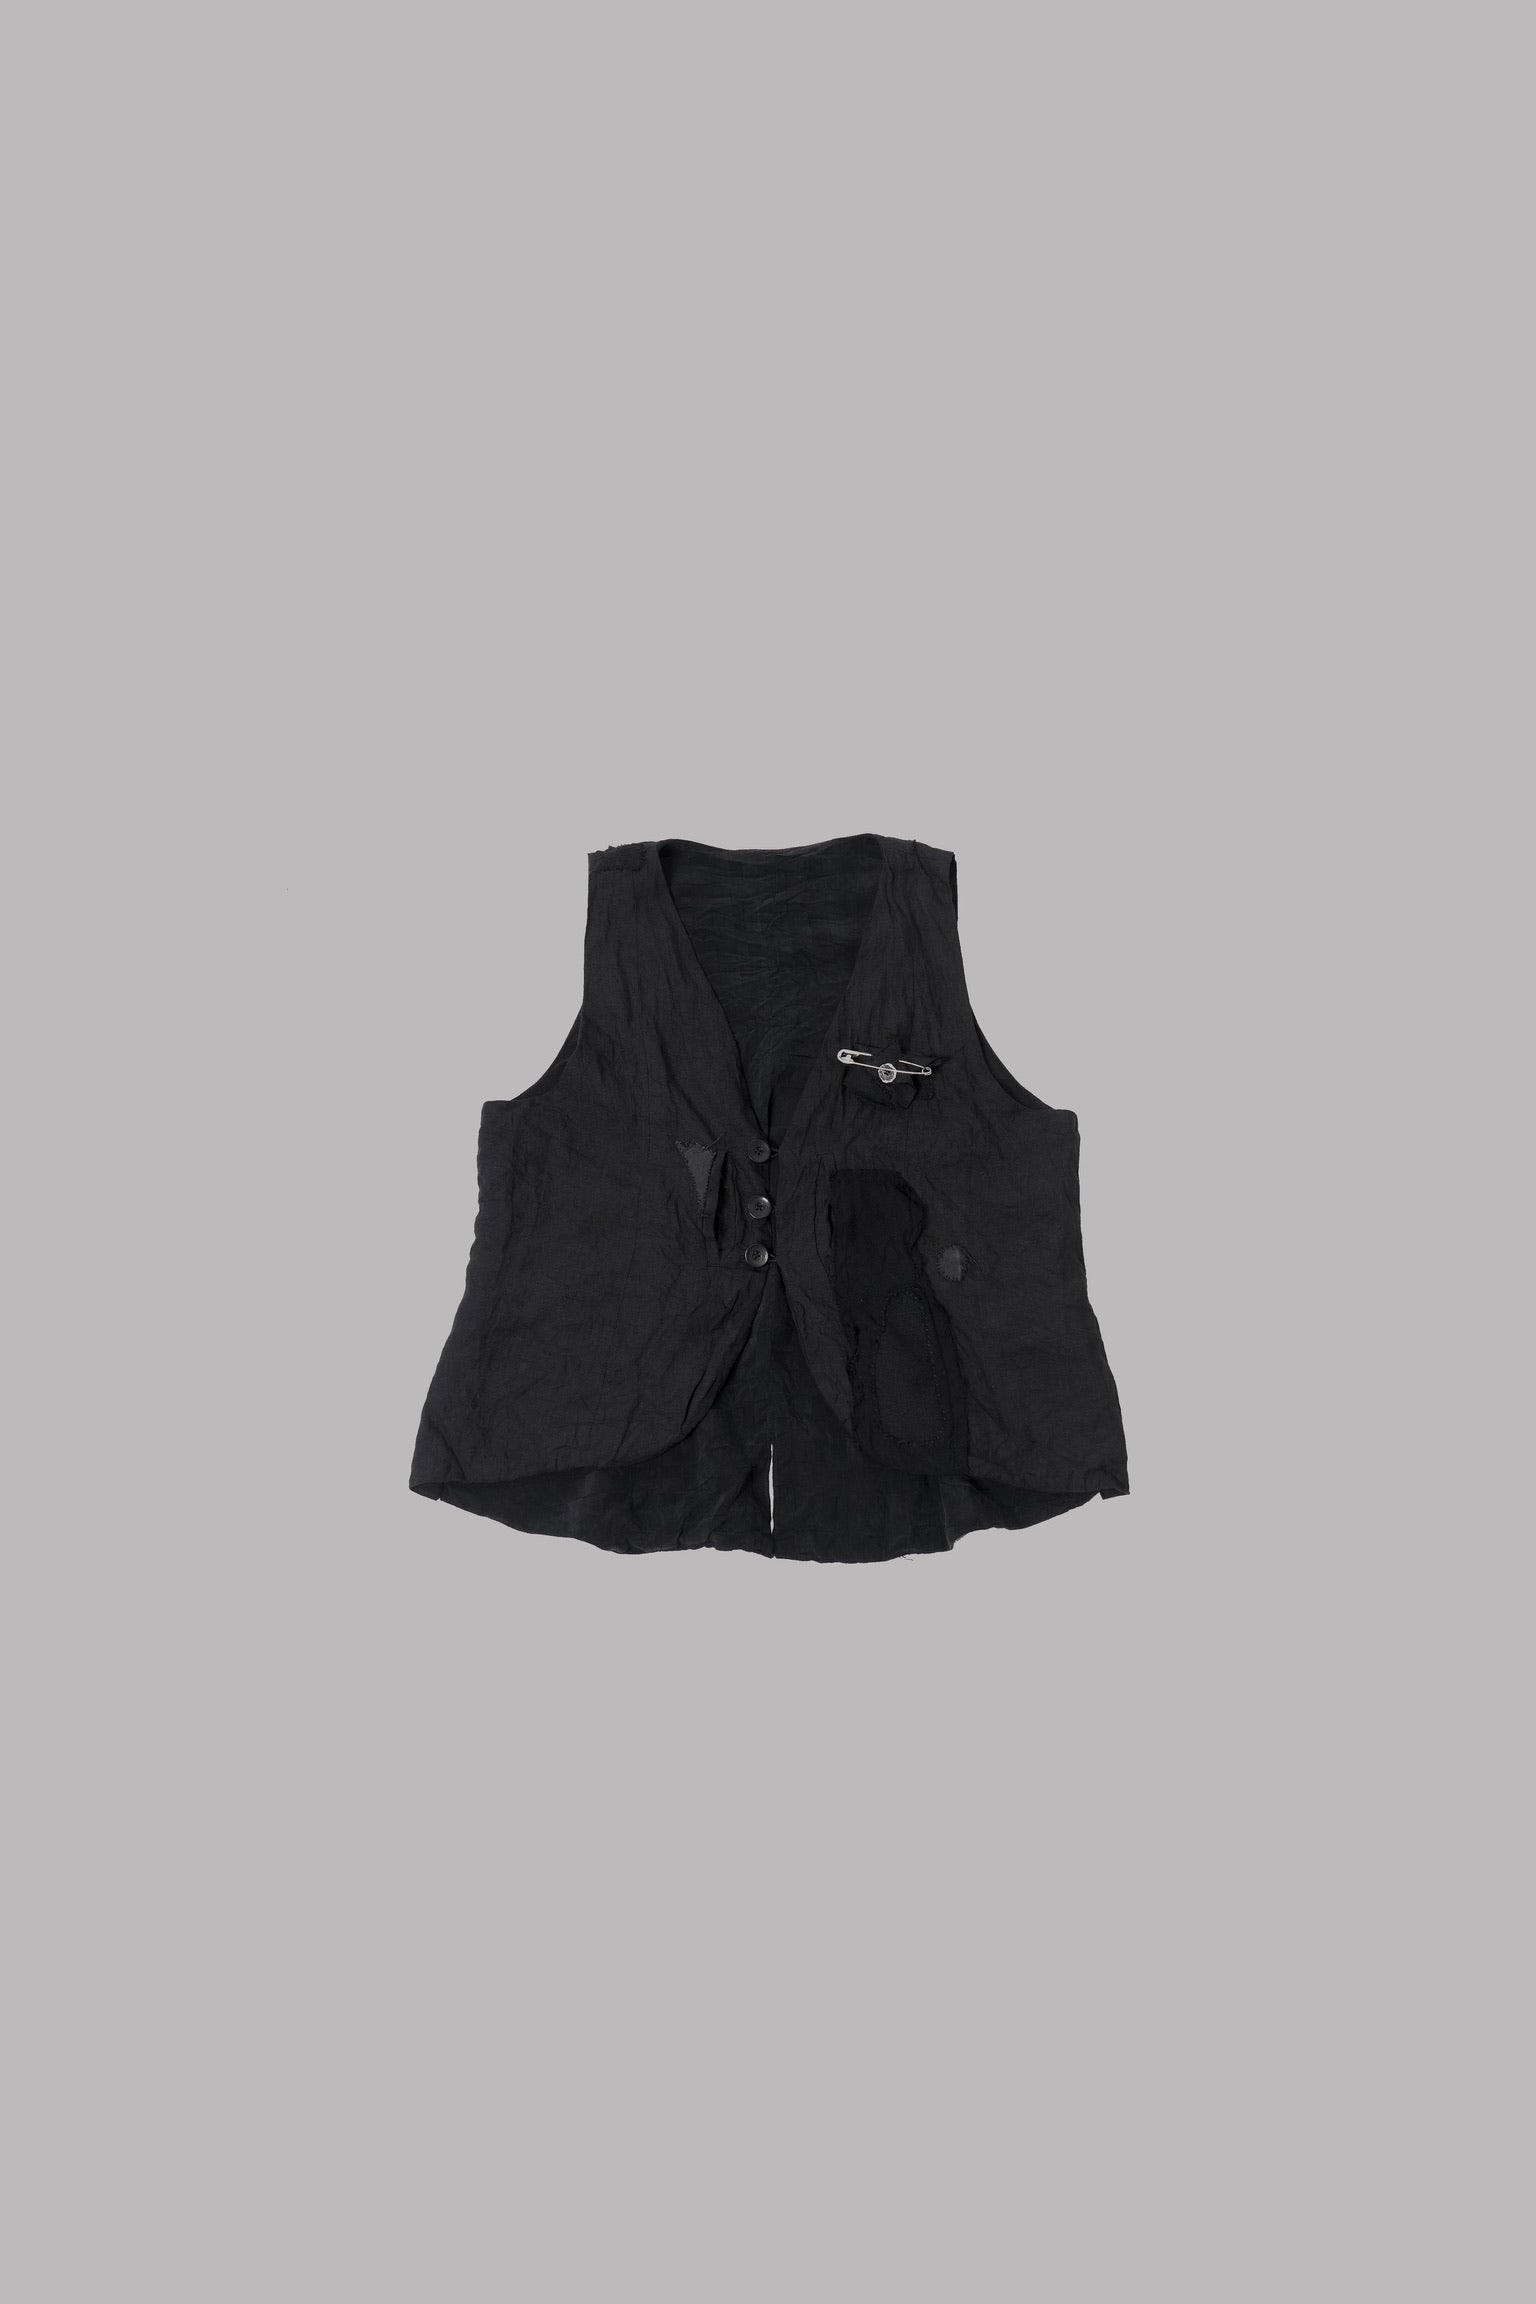 012- Patch Work Vest